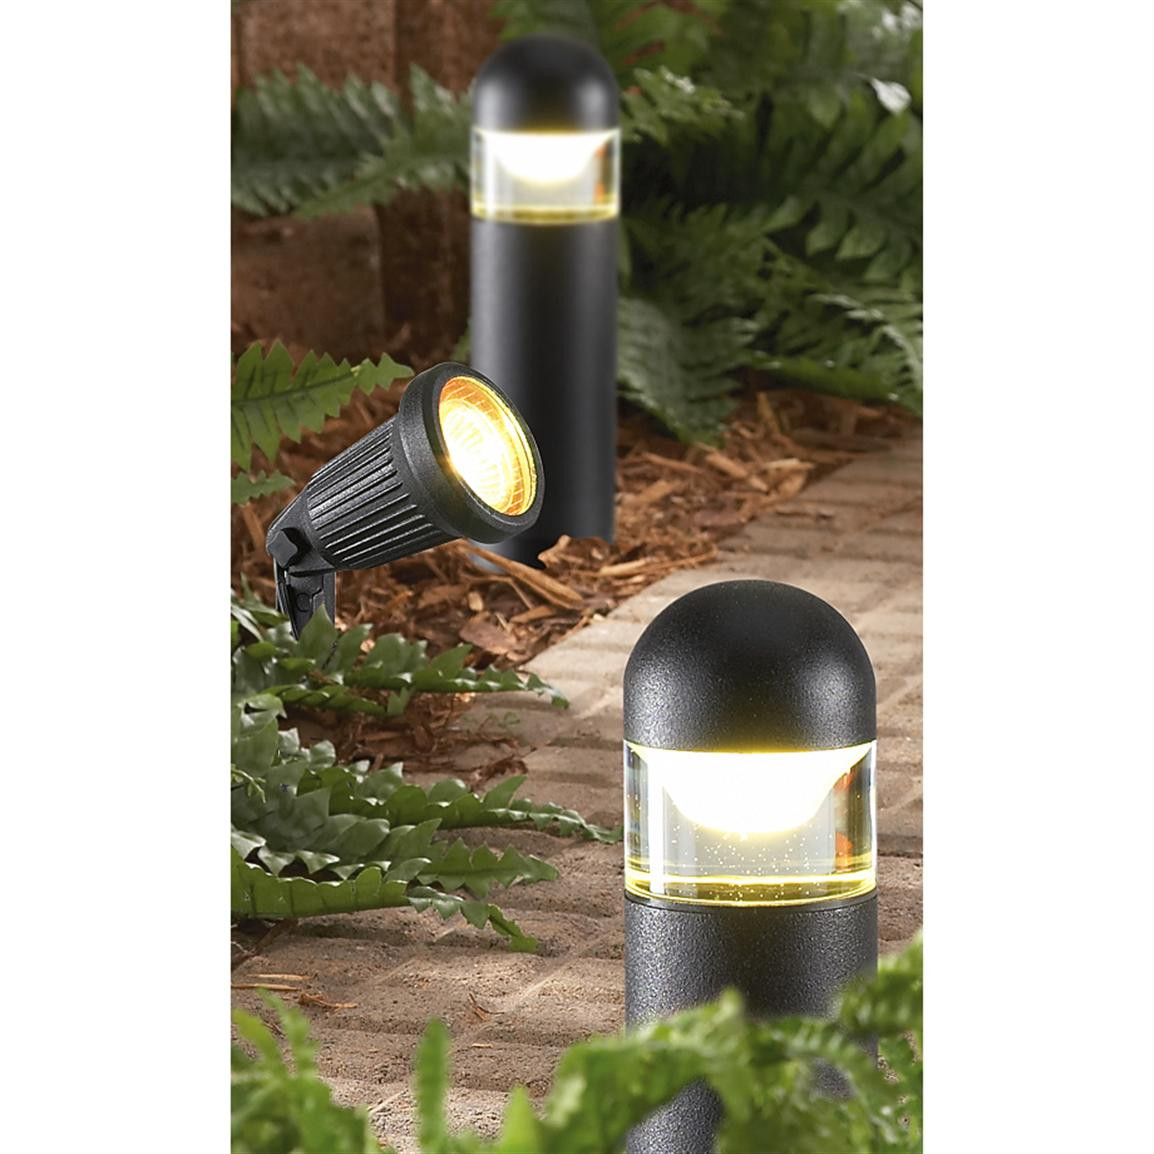 Best ideas about Malibu Outdoor Lighting
. Save or Pin Malibu 8 Pc Landscape Light Kit Solar Now.